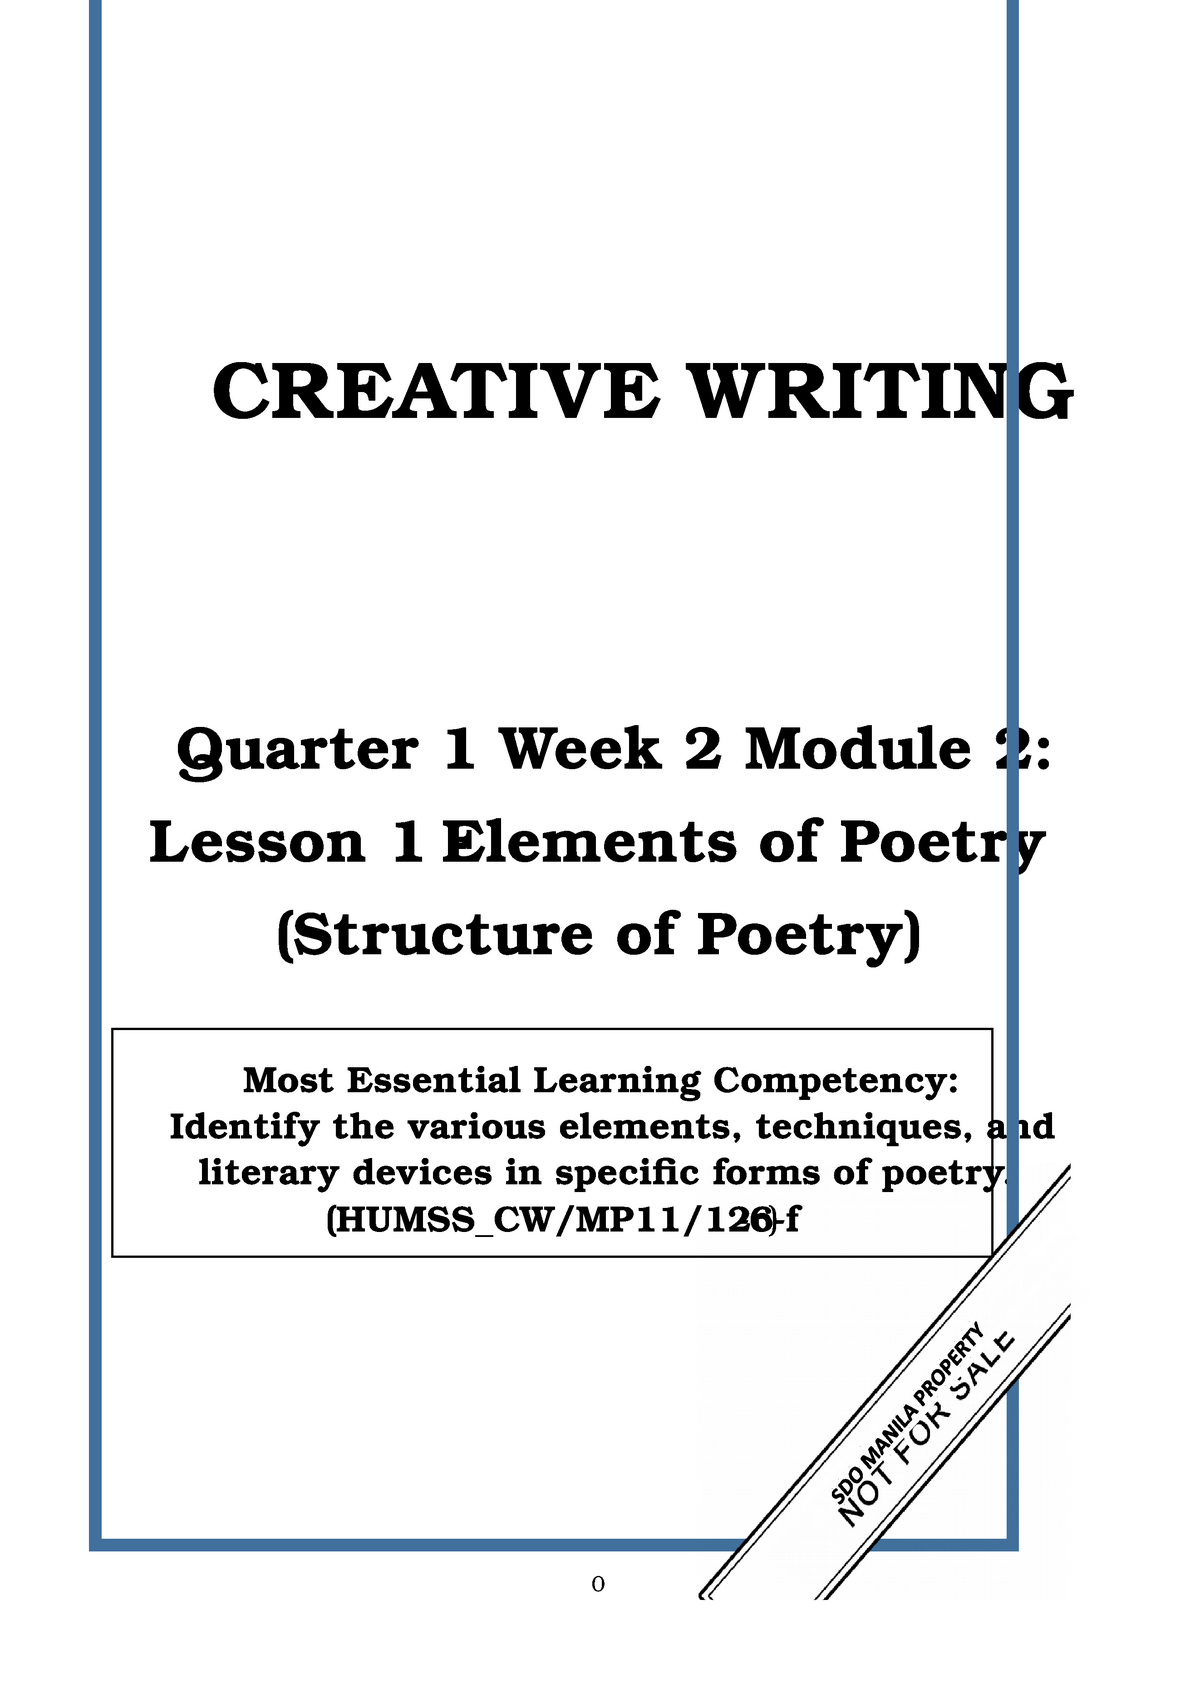 grade 12 creative writing module 4 answer key